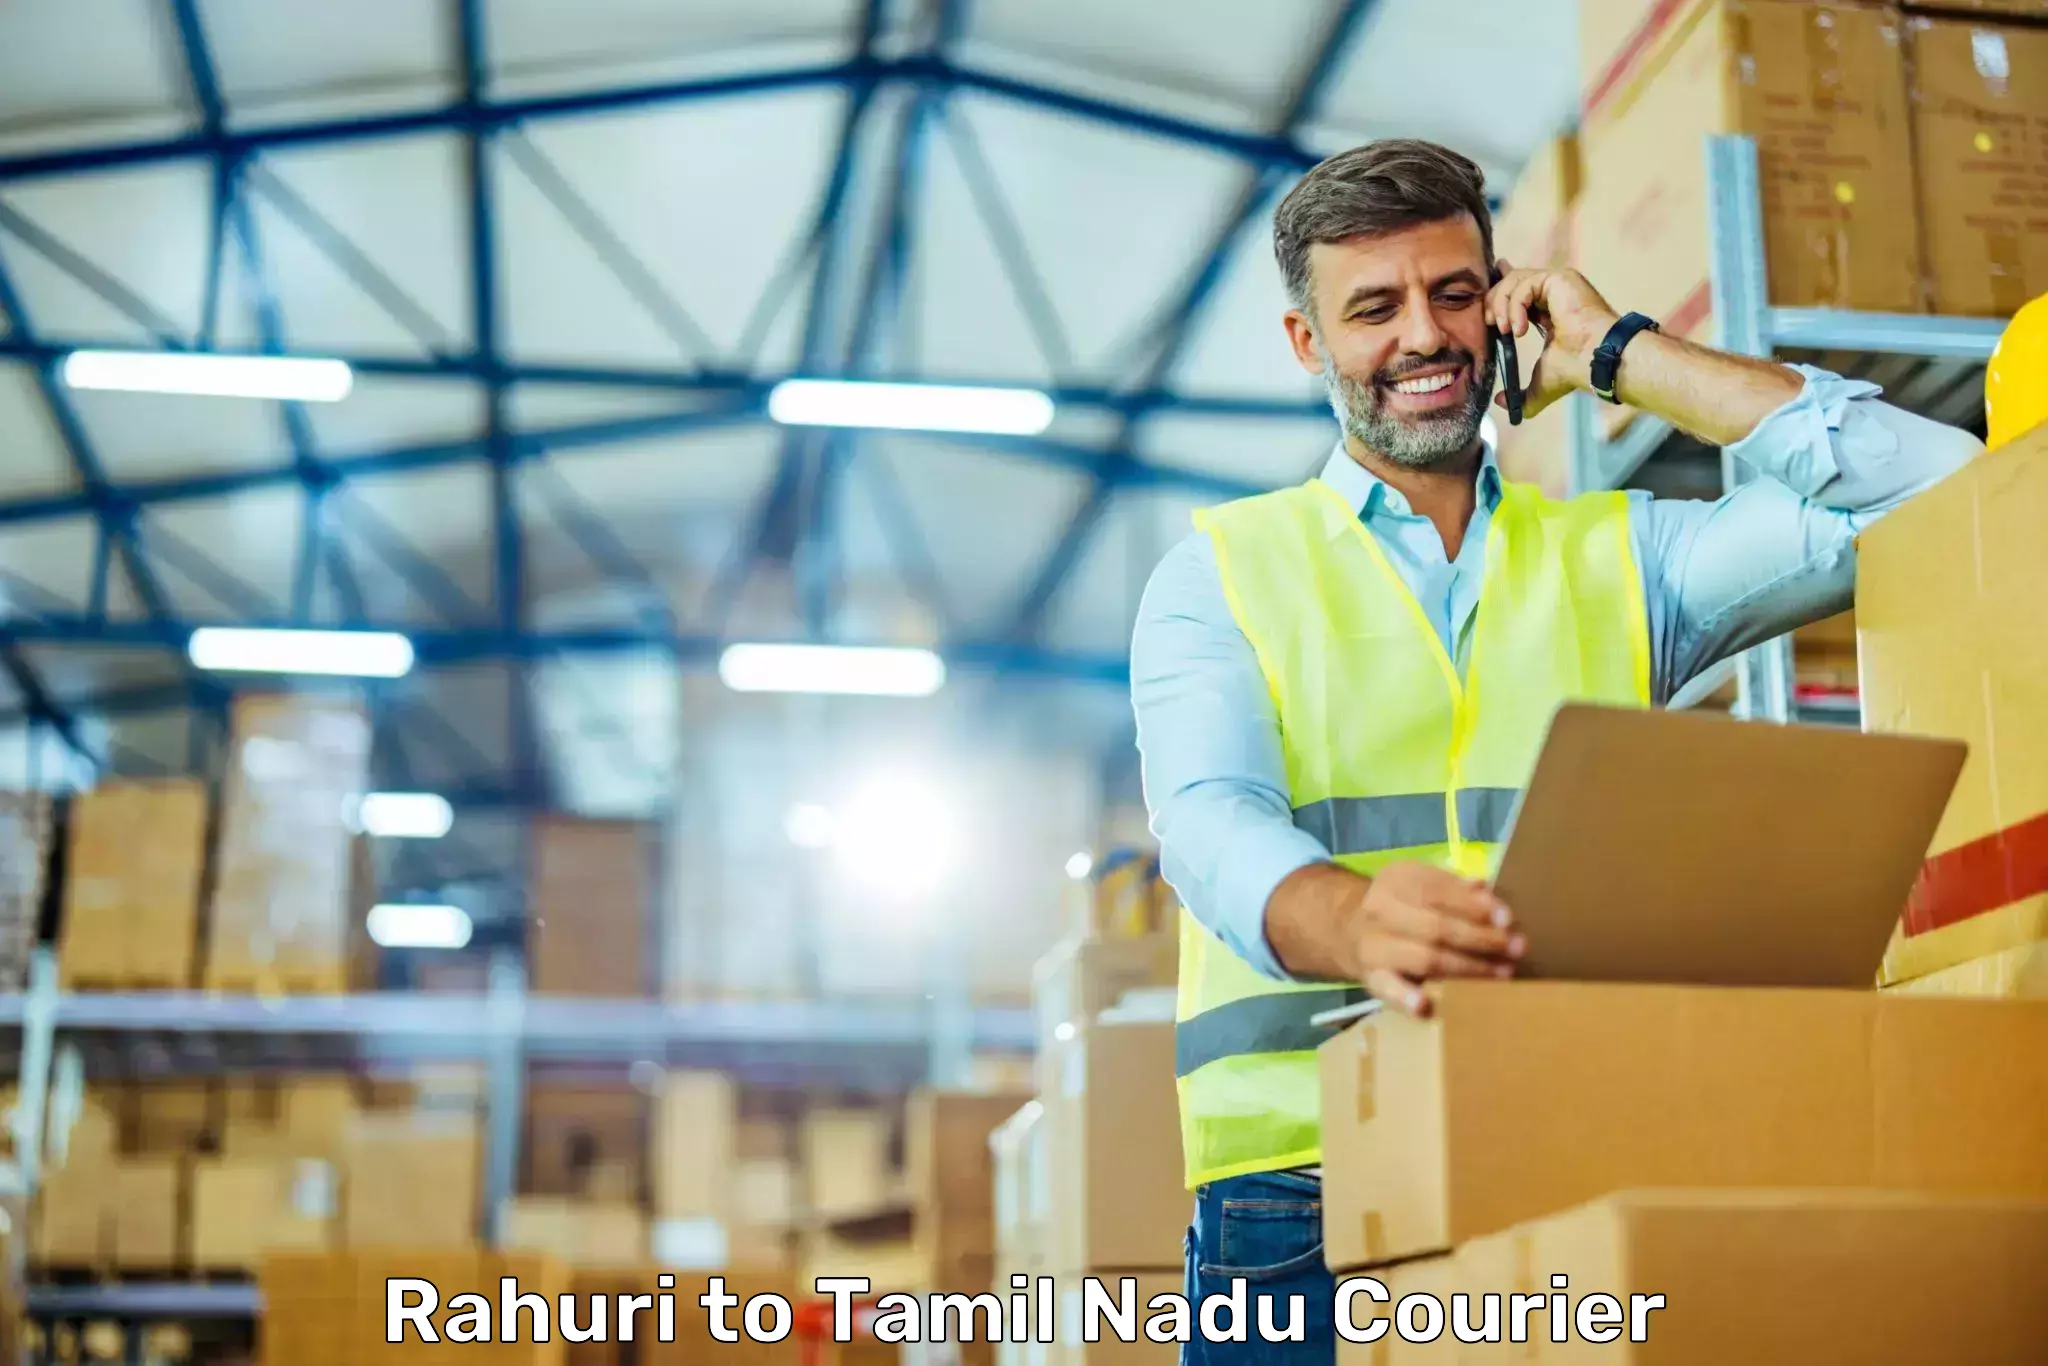 High-speed parcel service Rahuri to Vriddhachalam